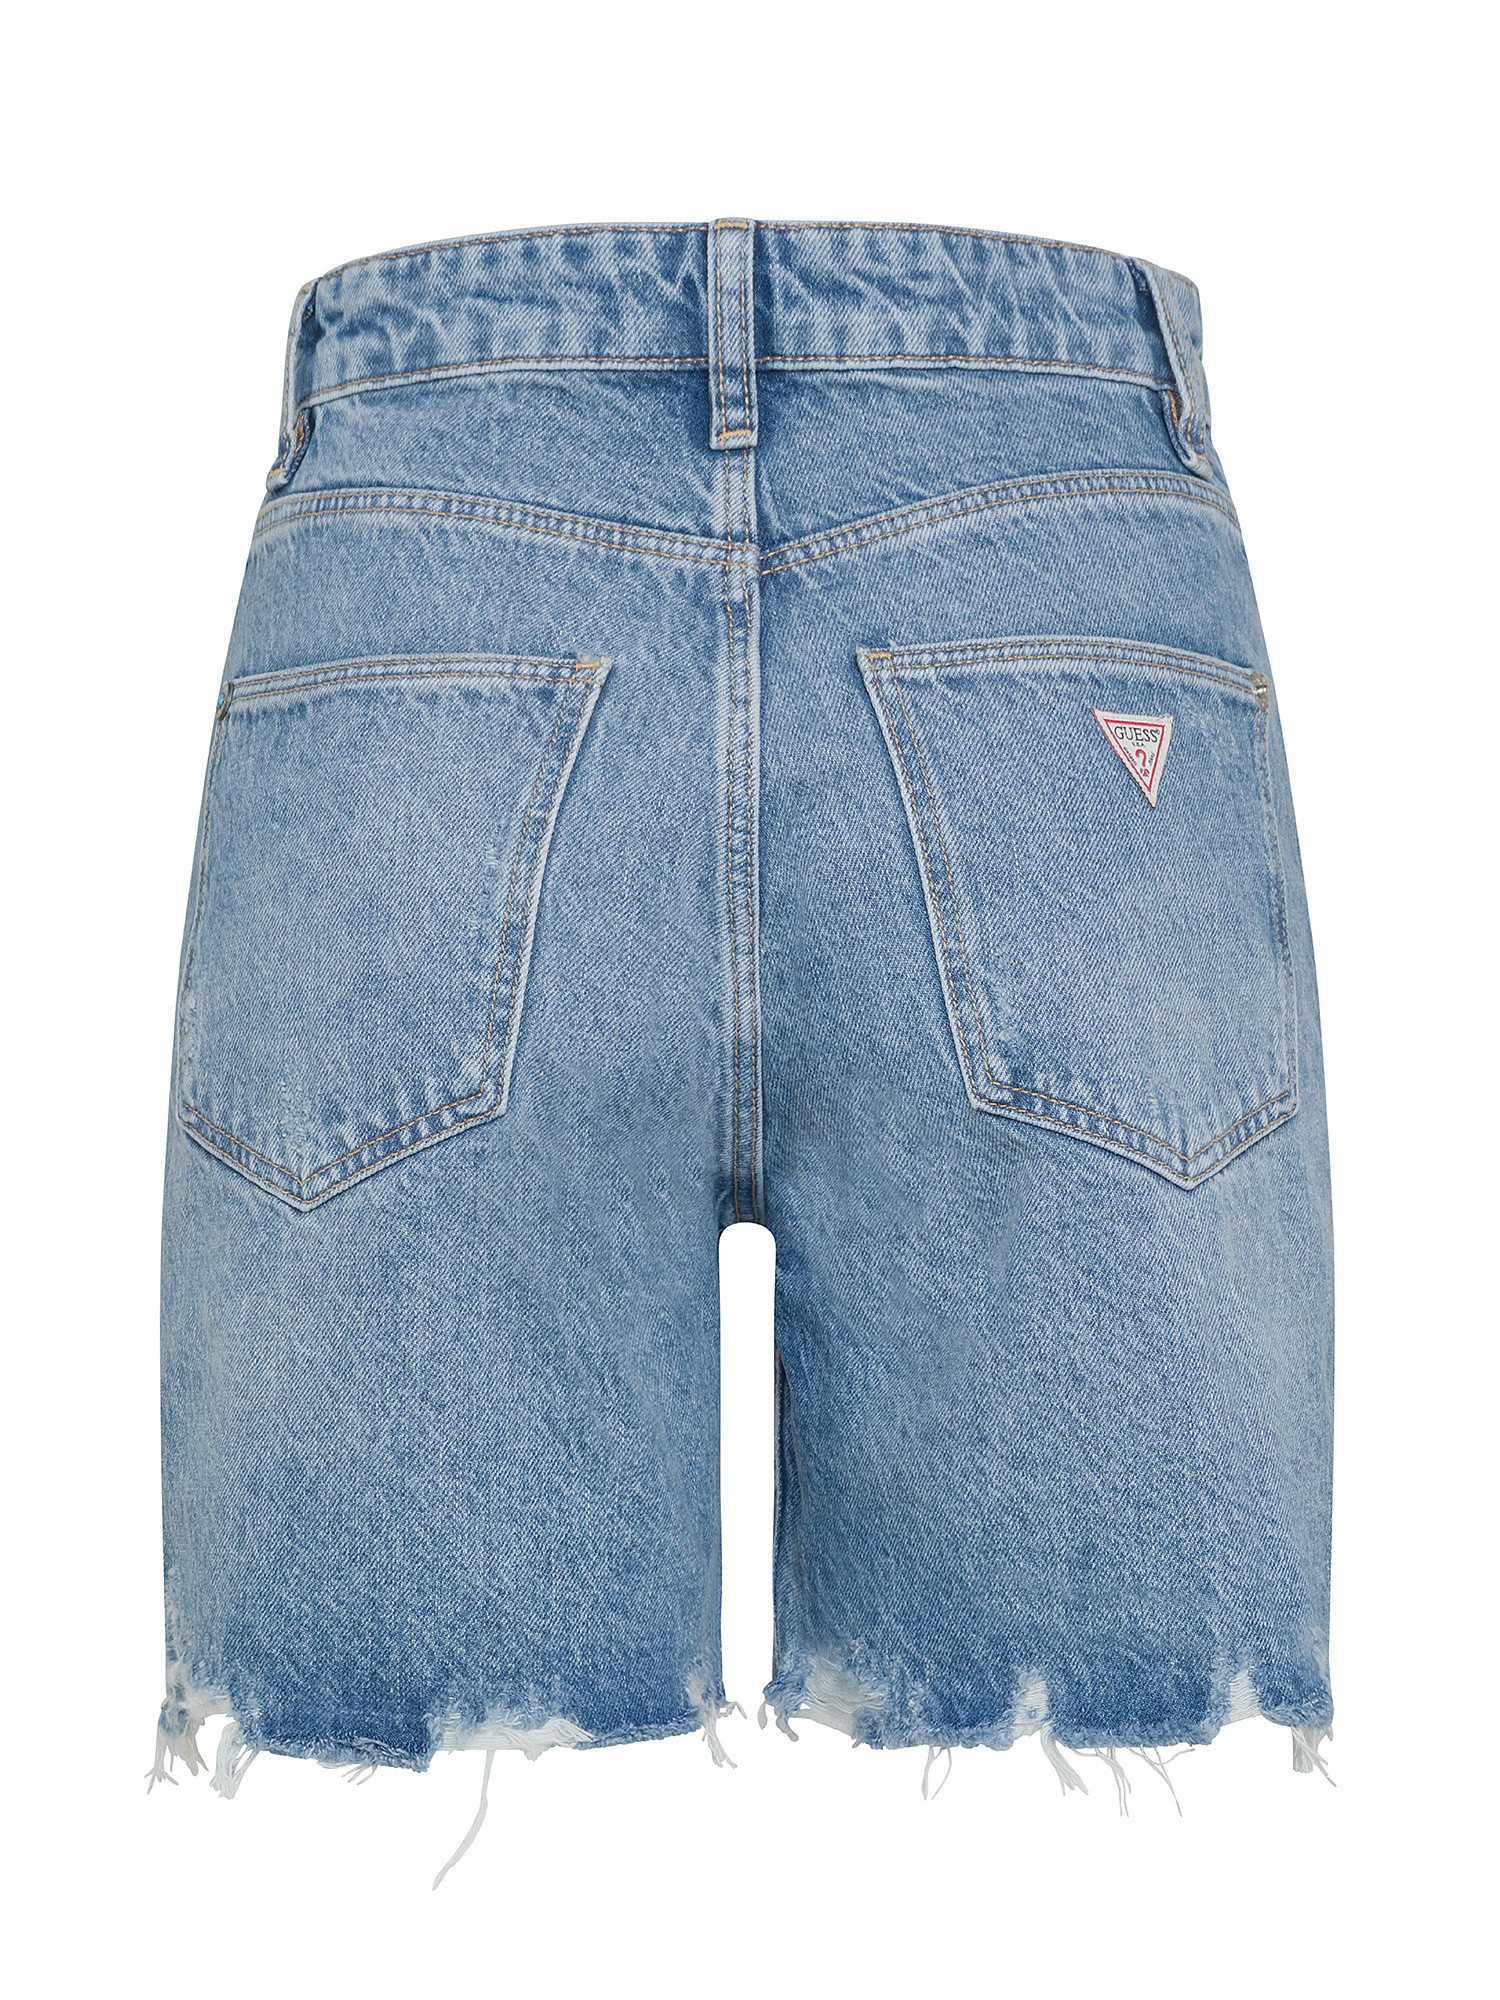 GUESS - Short in jeans a vita alta, Denim, large image number 1